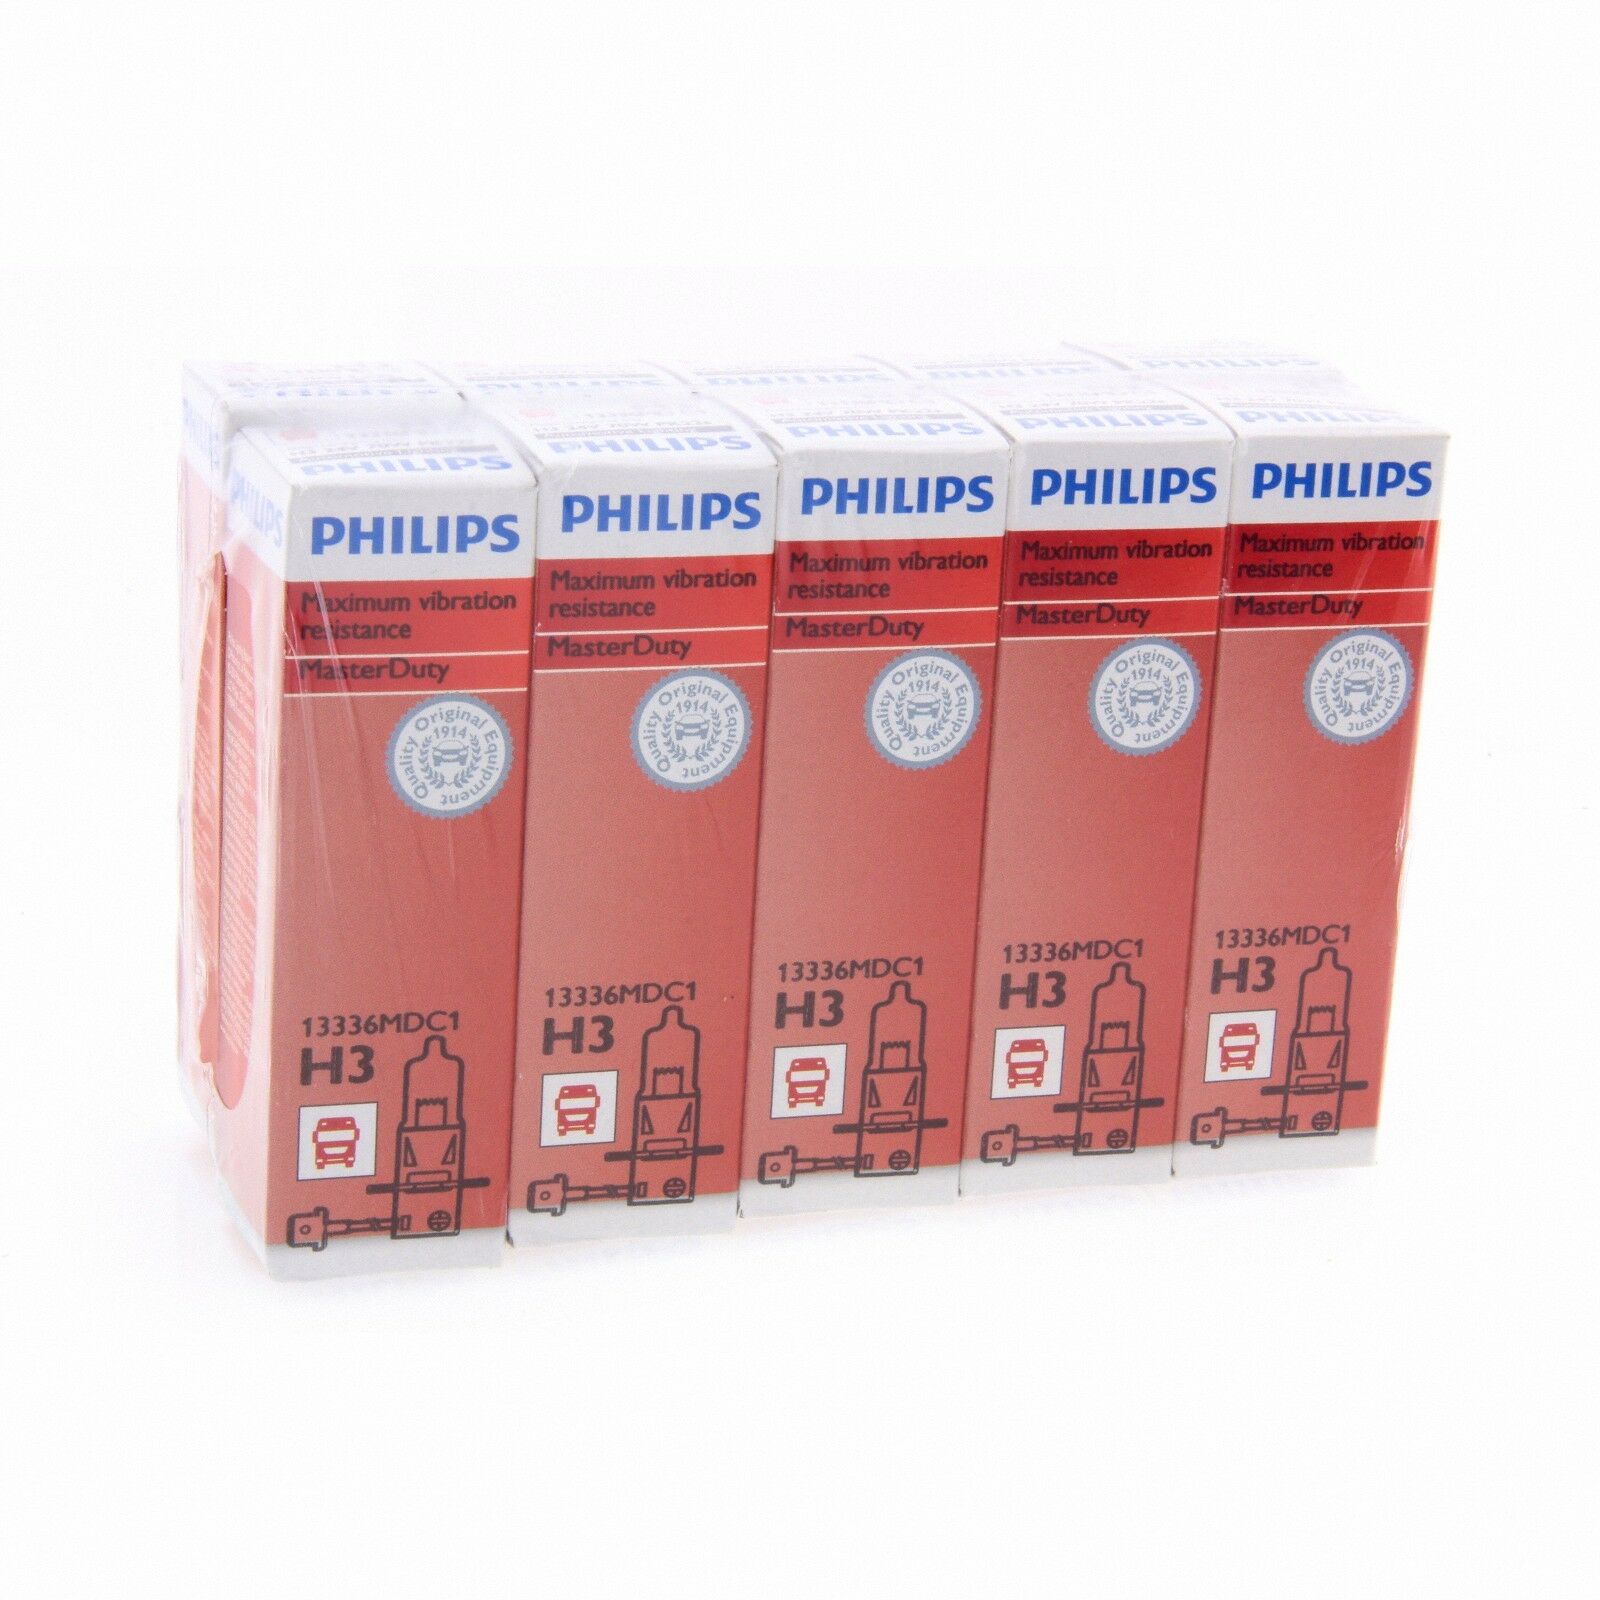 10er Box H3 Philips MasterDuty 2x Longlife LKW 24V Halogenlampe 13336MD